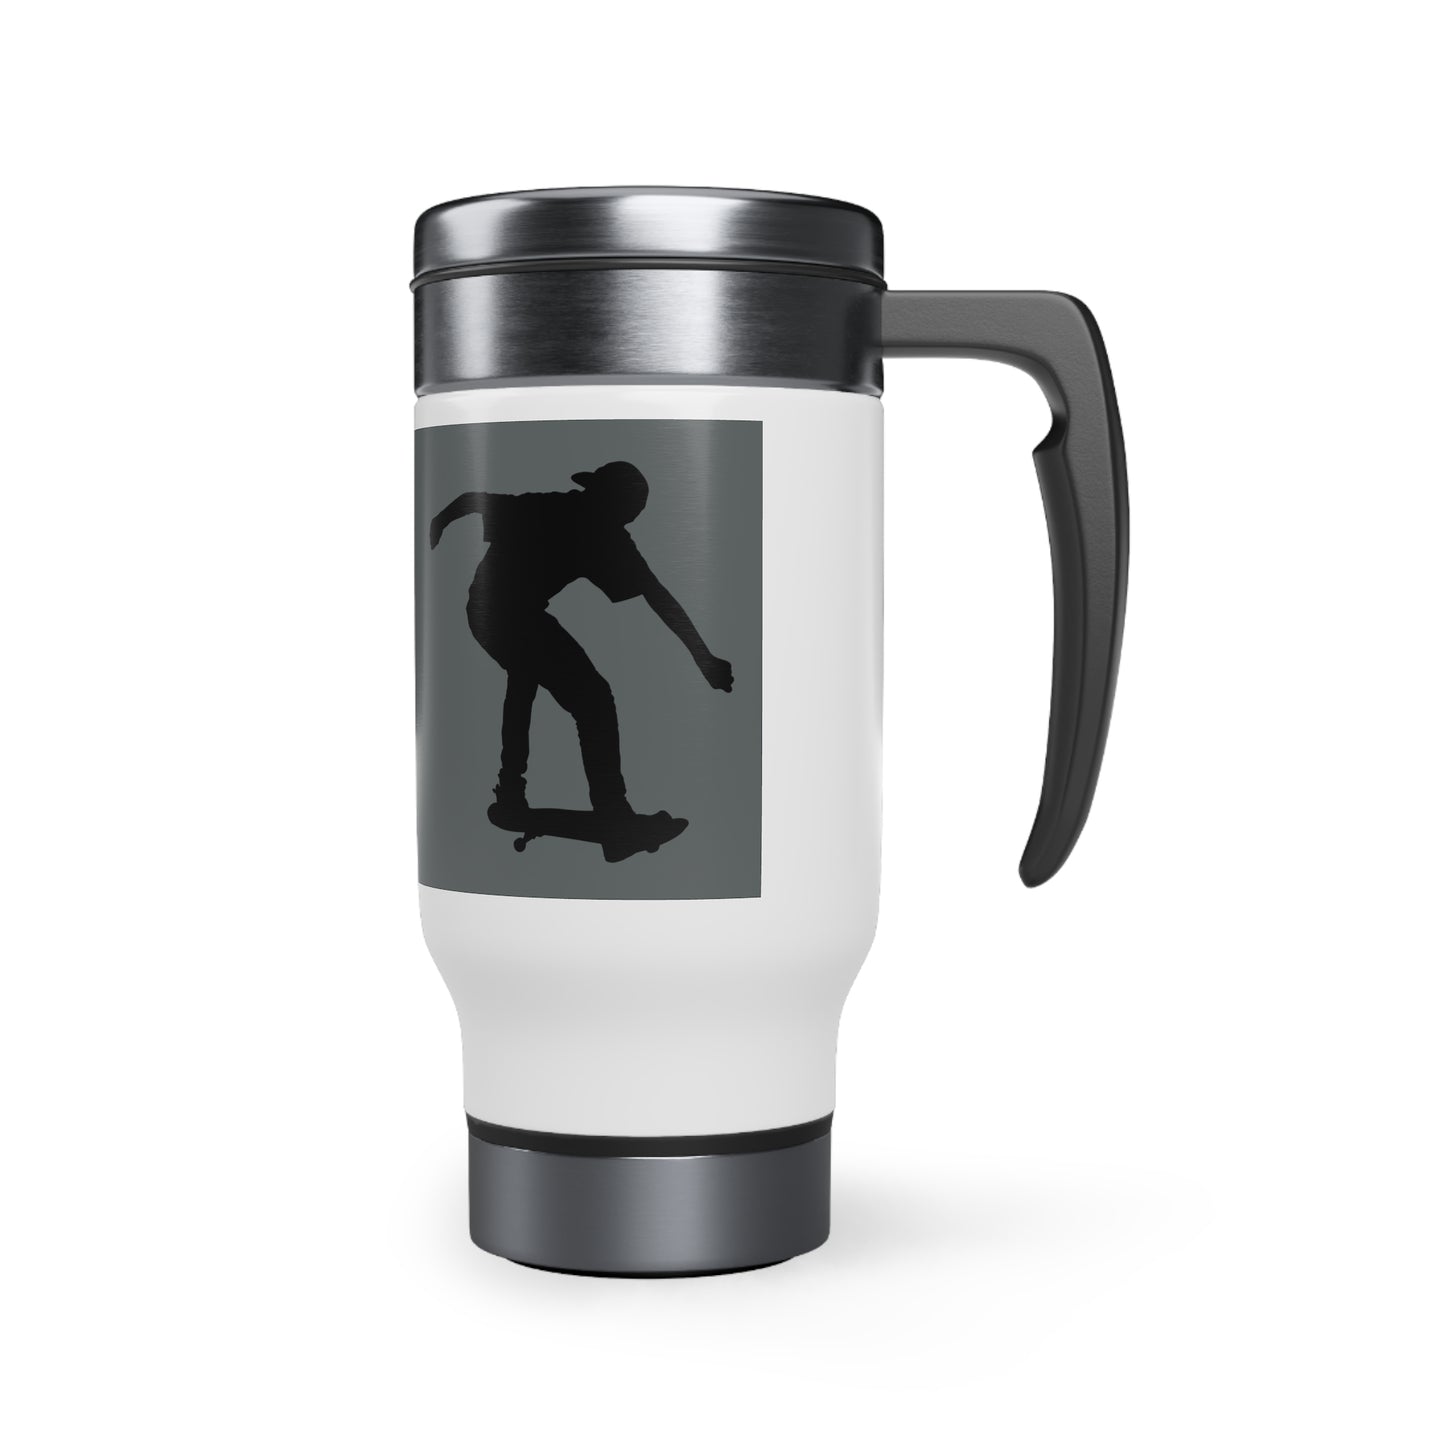 Stainless Steel Travel Mug with Handle, 14oz: Skateboarding Dark Grey